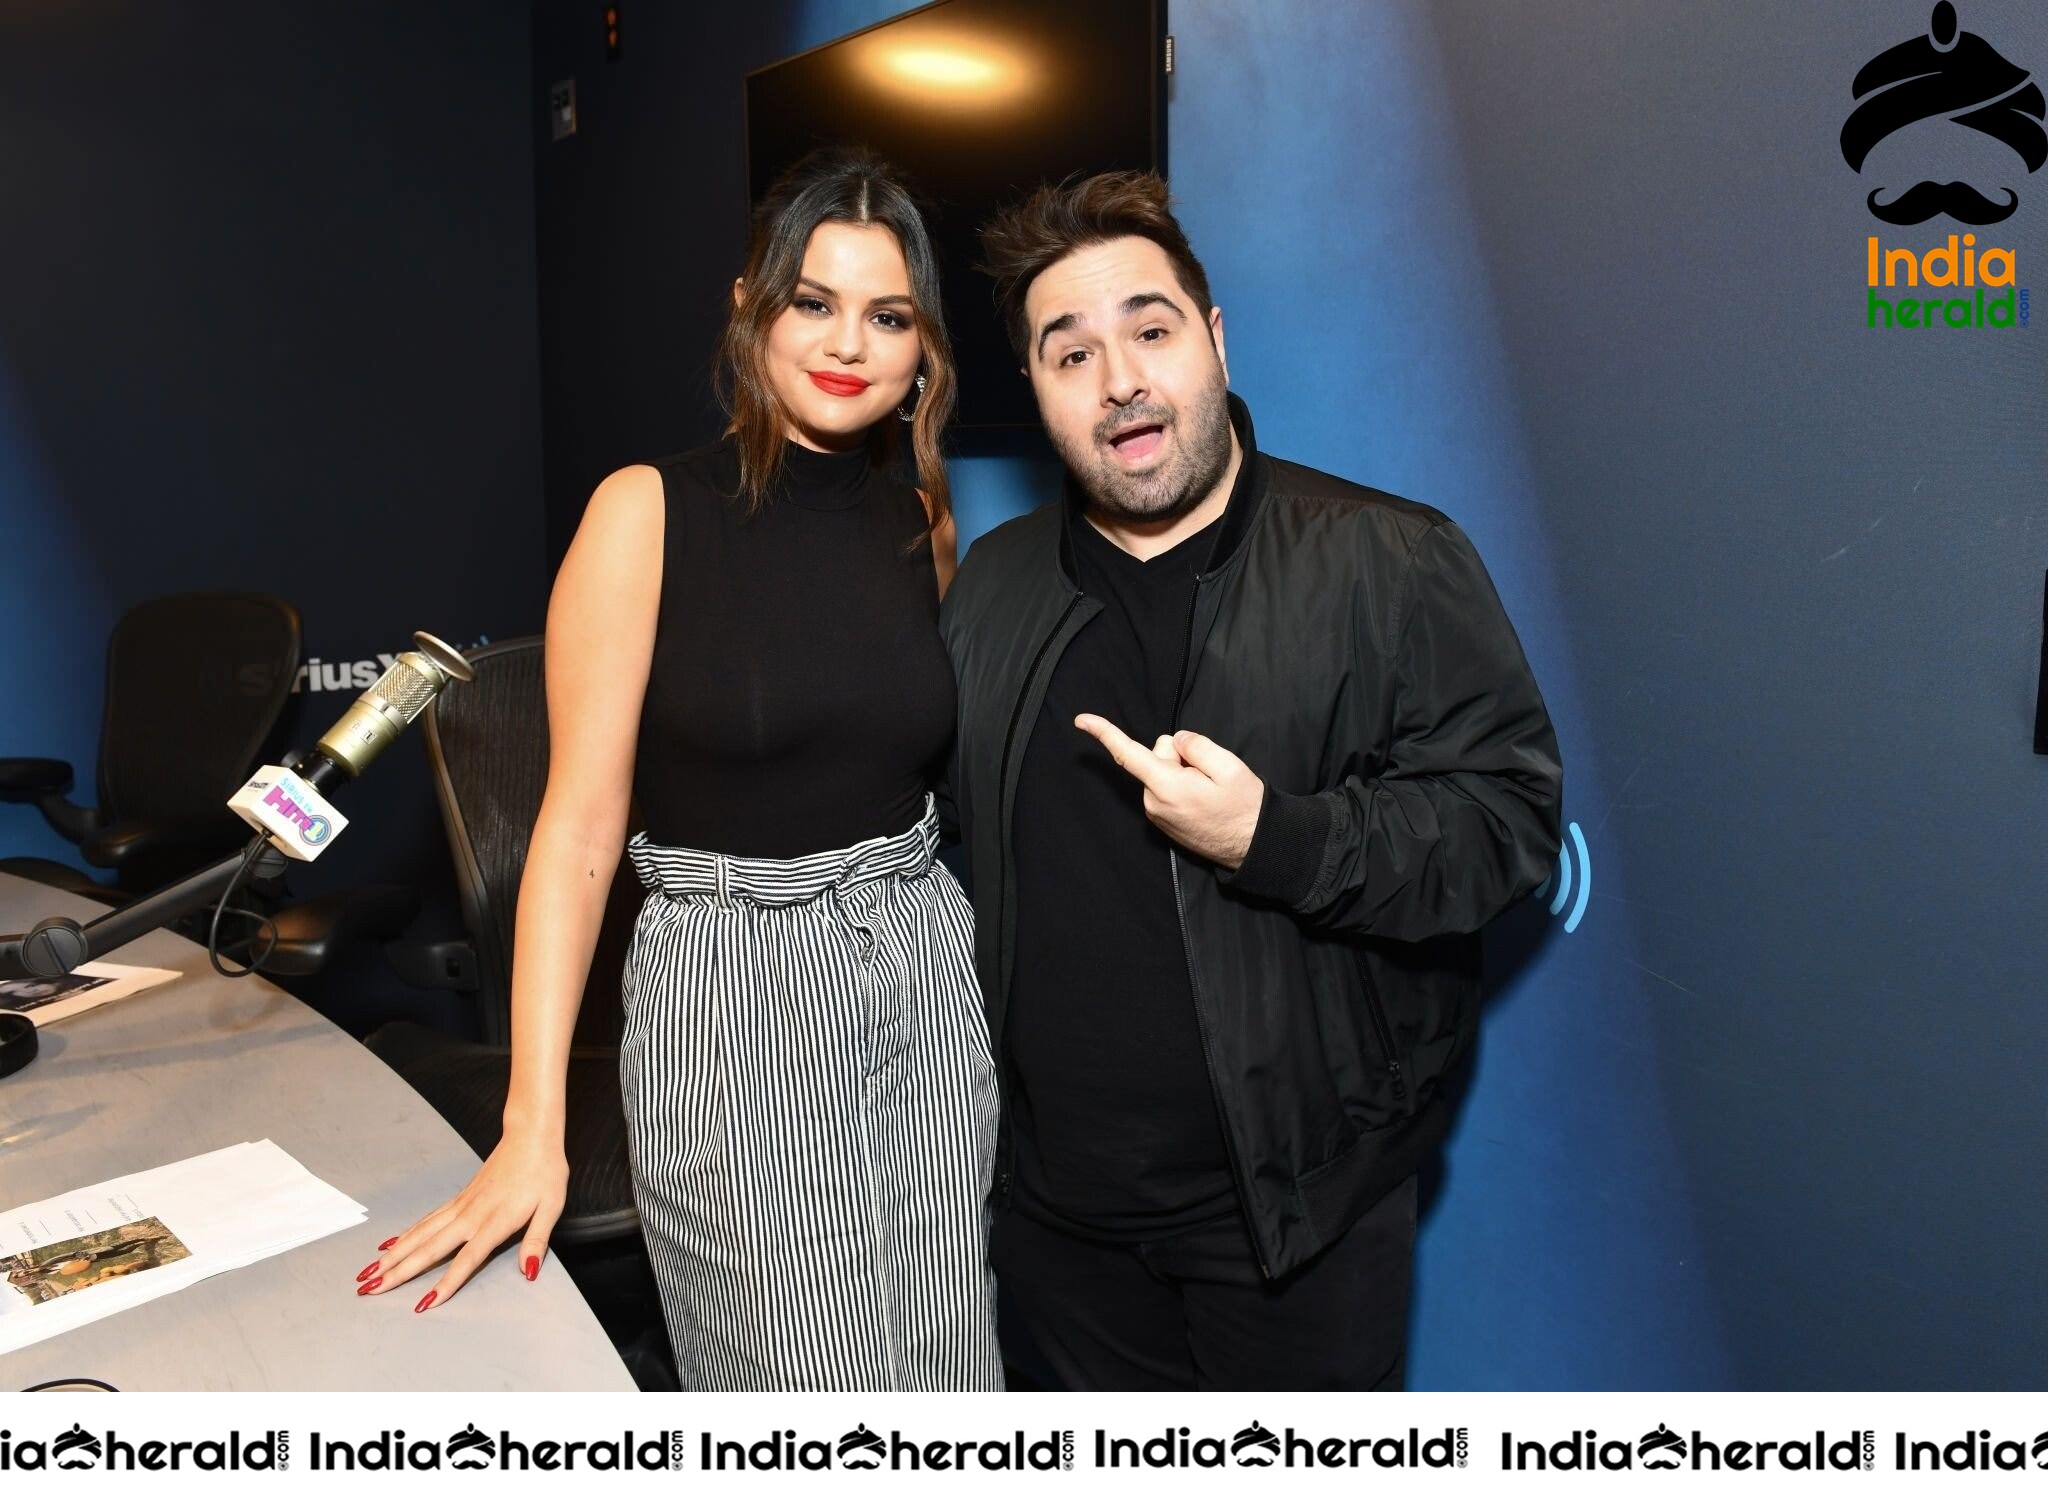 Selena Gomez at Sirius XM Radio in NYC